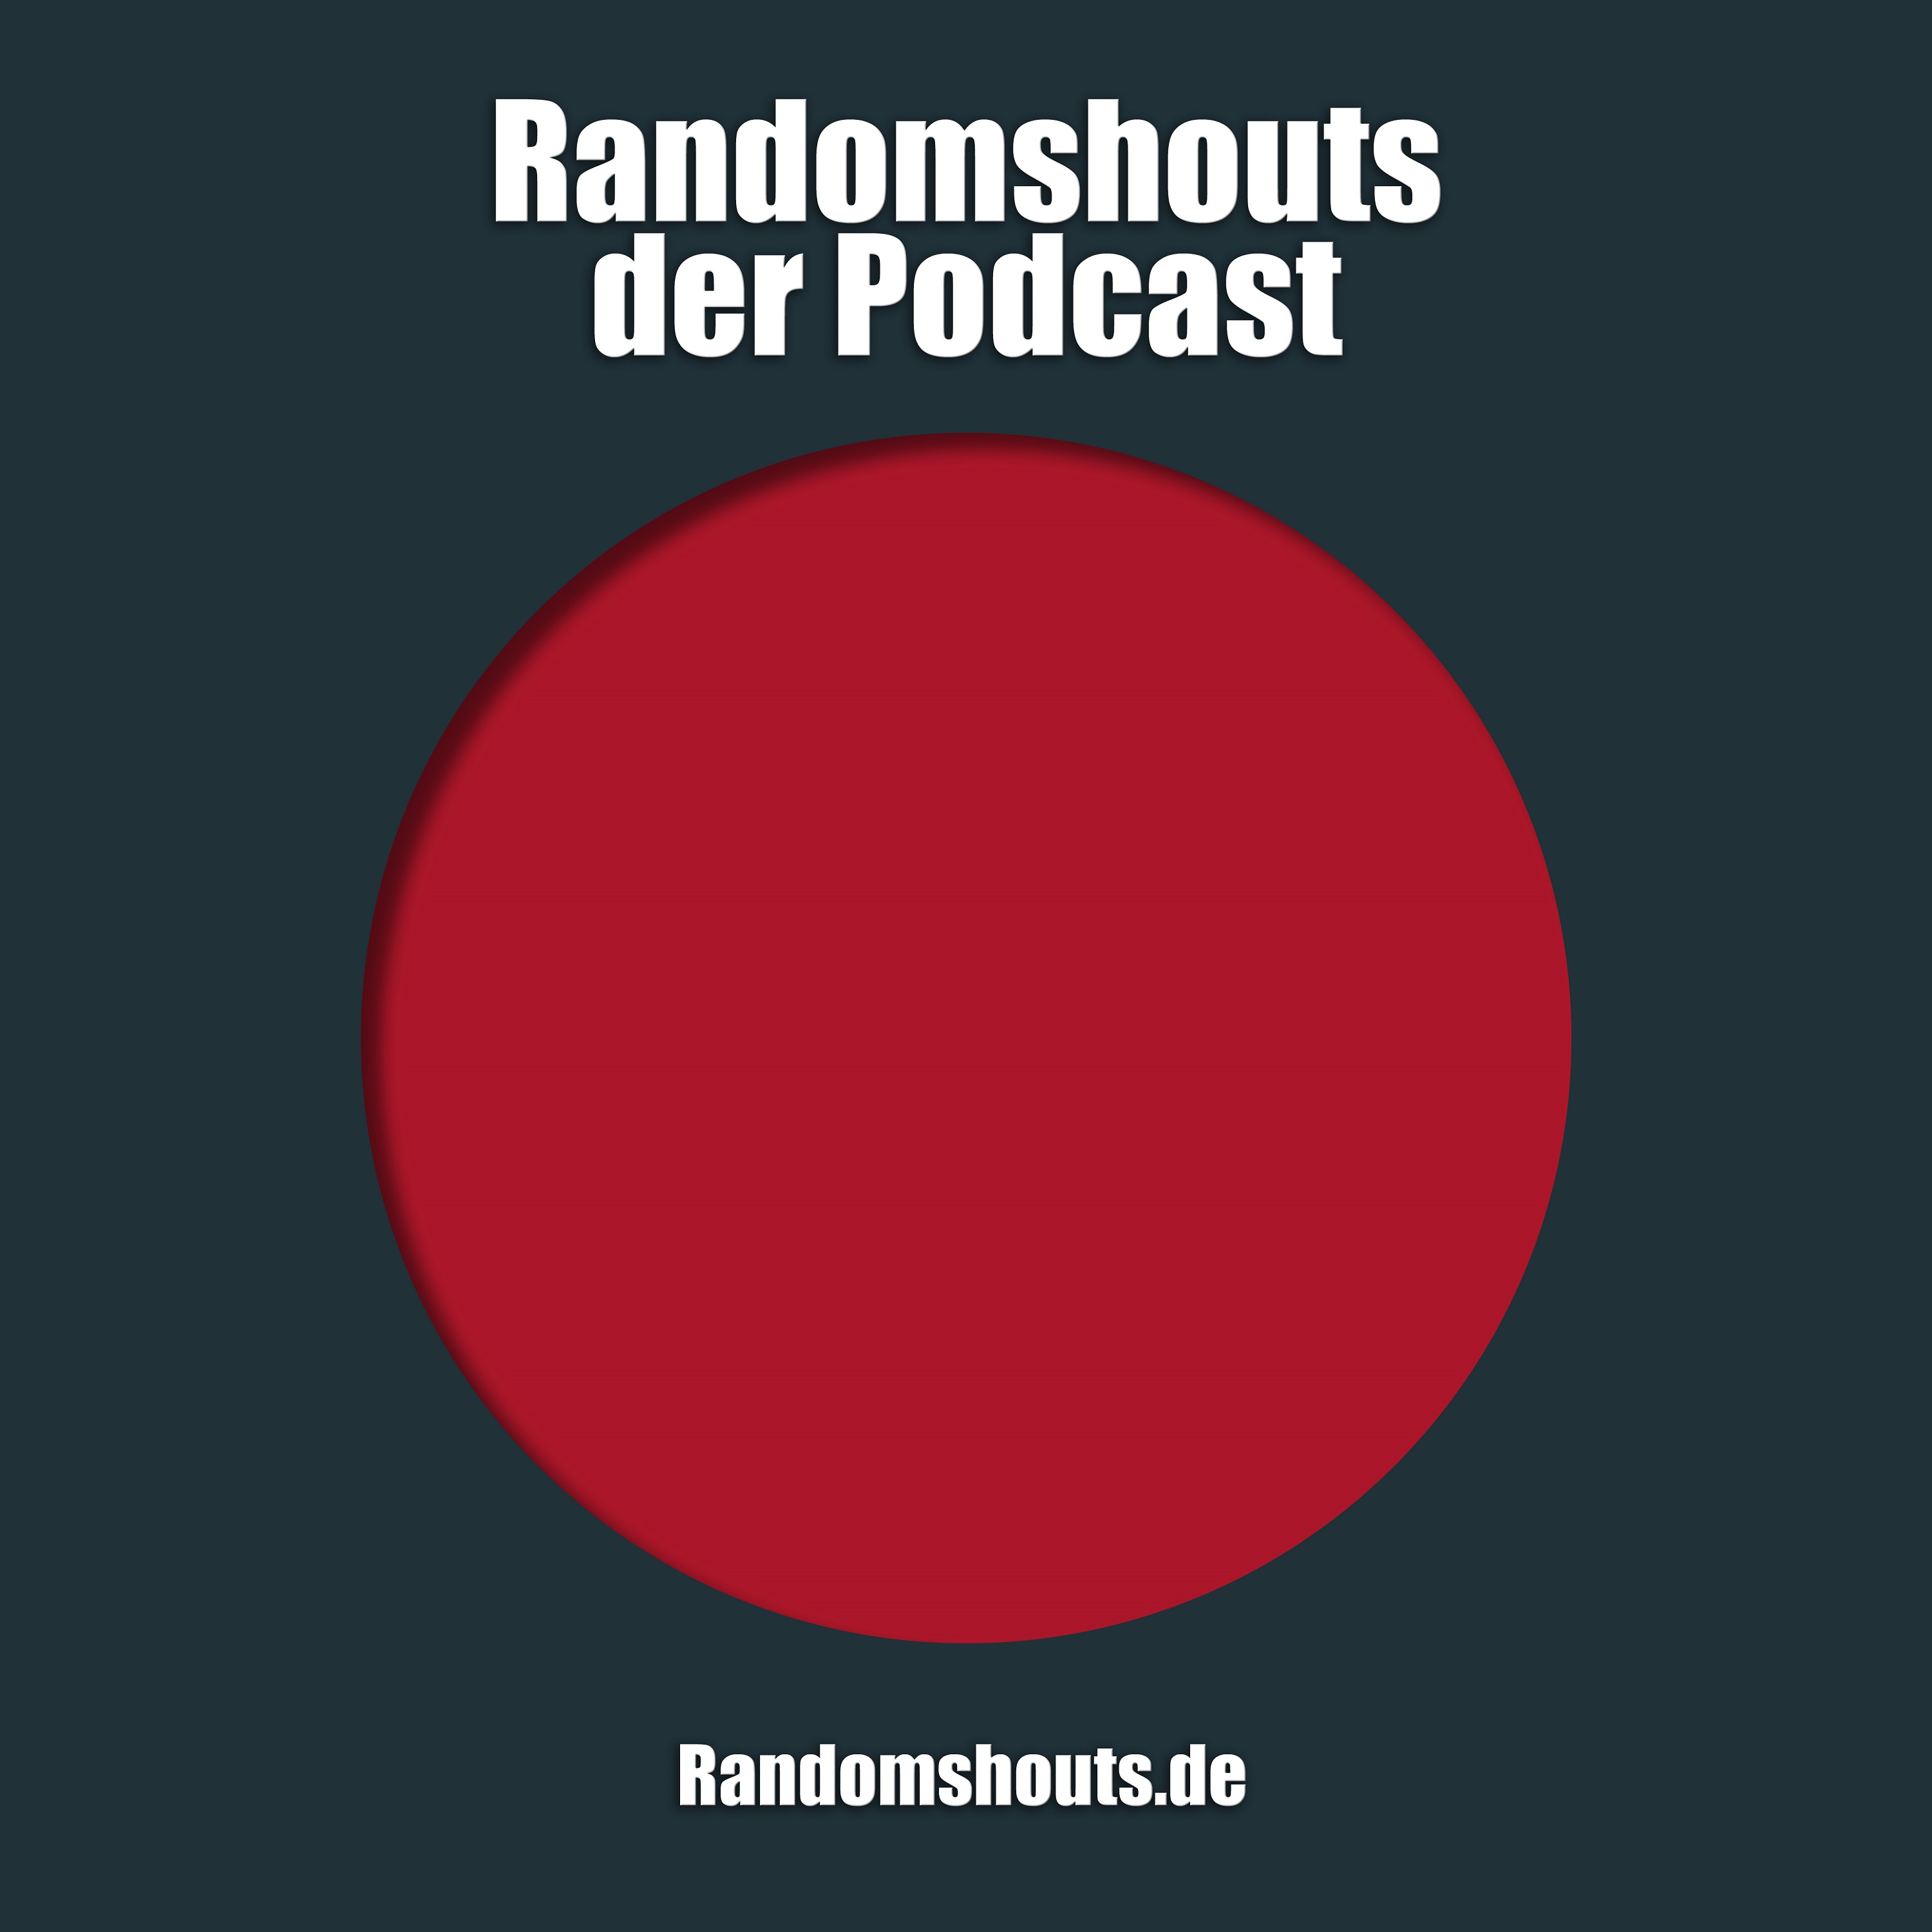 Randomshouts der Podcast - Episode 31: Dies ist kein True-Crime Podcast